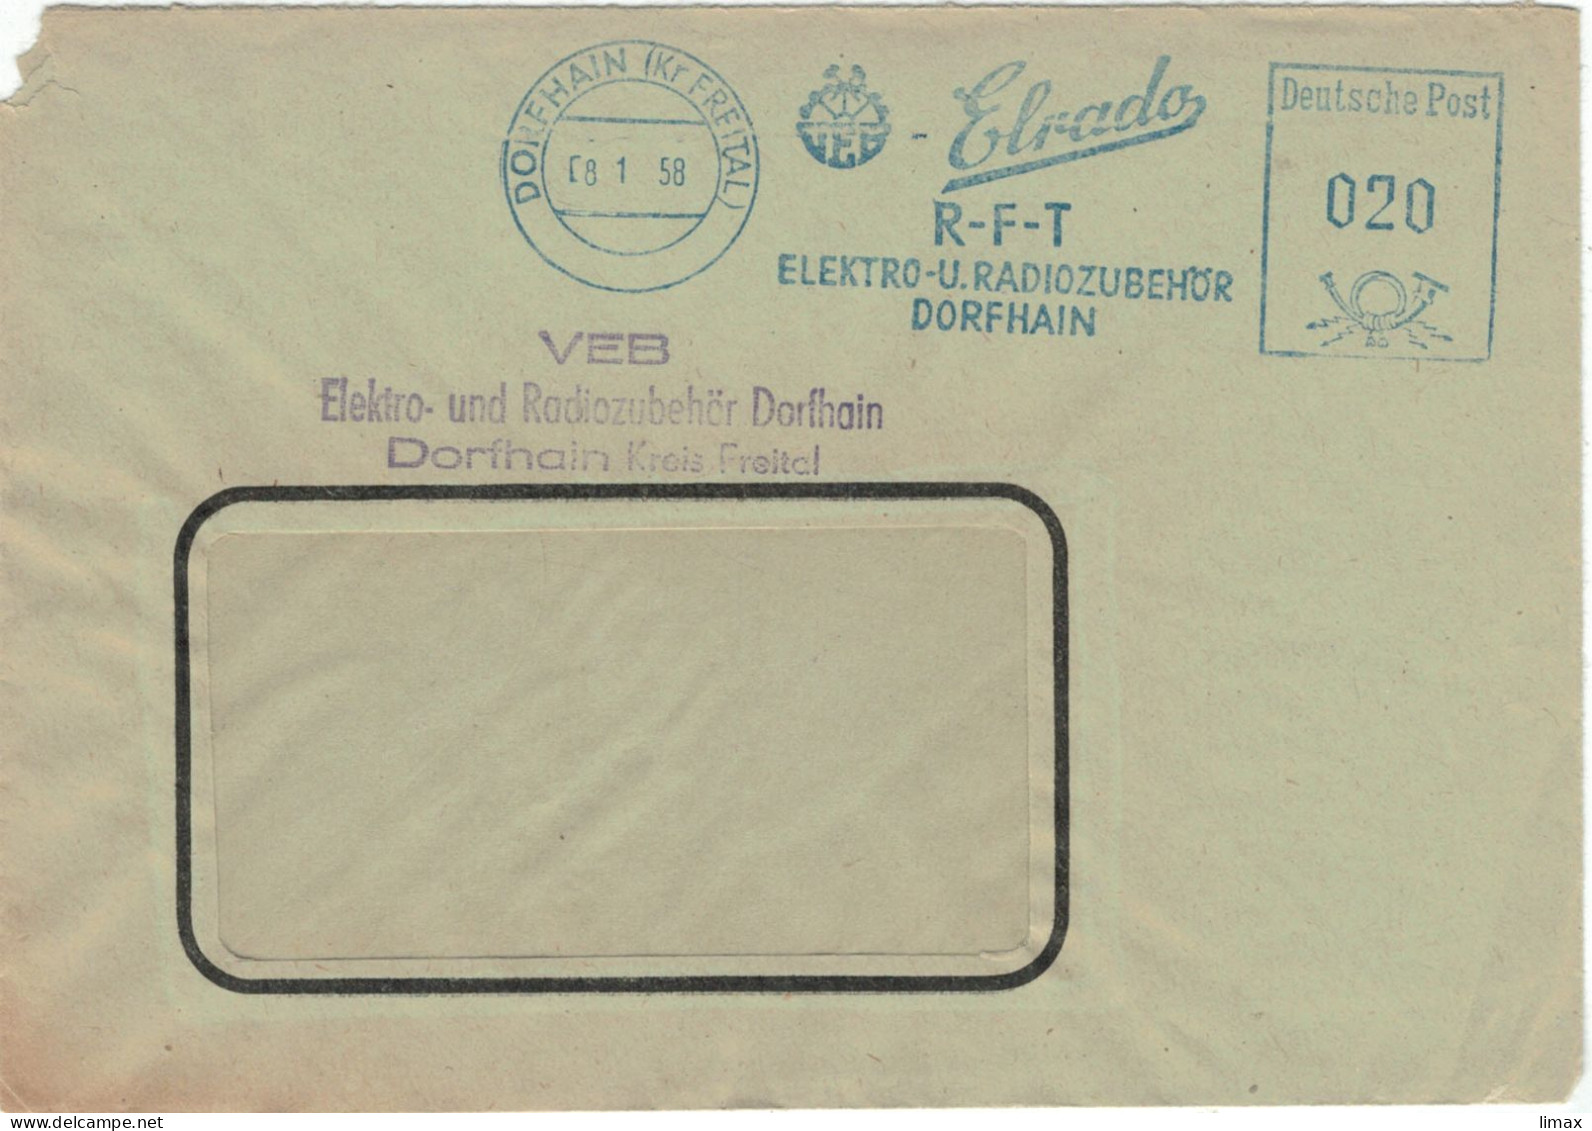 FK Elektro-Radio-Zubehör Dorfhain Freital 1958 Elrado - Frankeermachines (EMA)